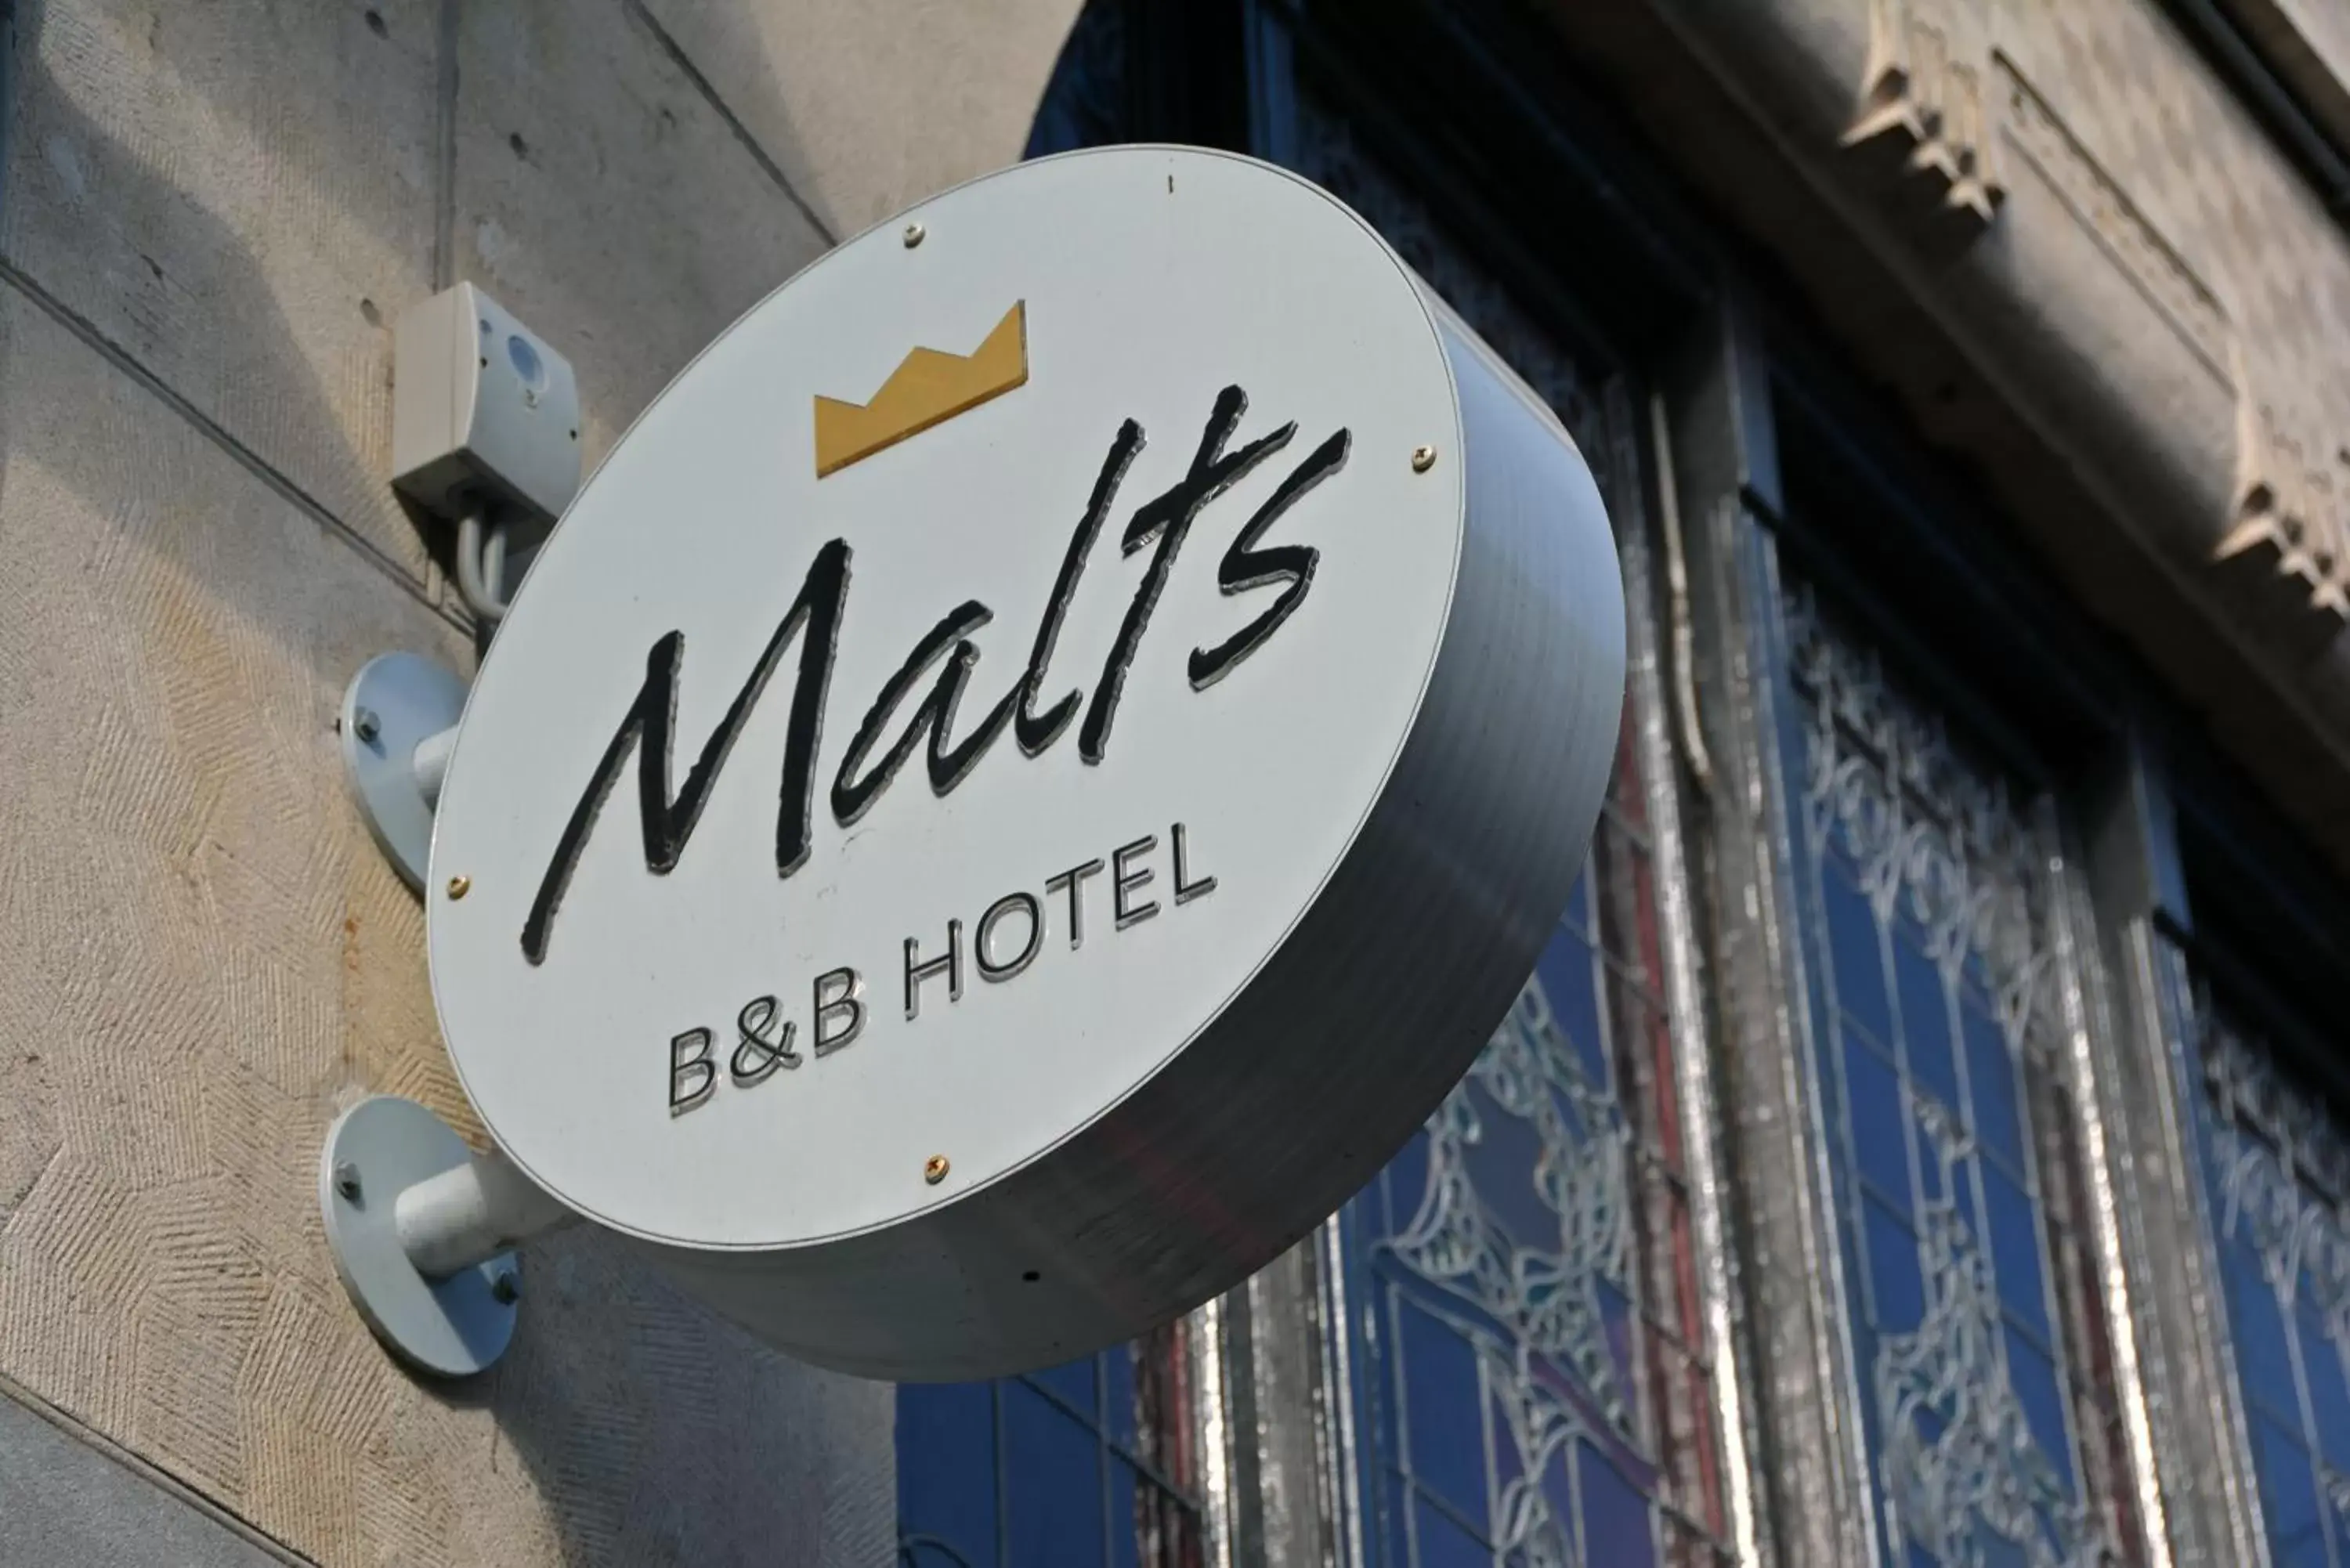 Facade/entrance in Bed & Breakfast Hotel Malts